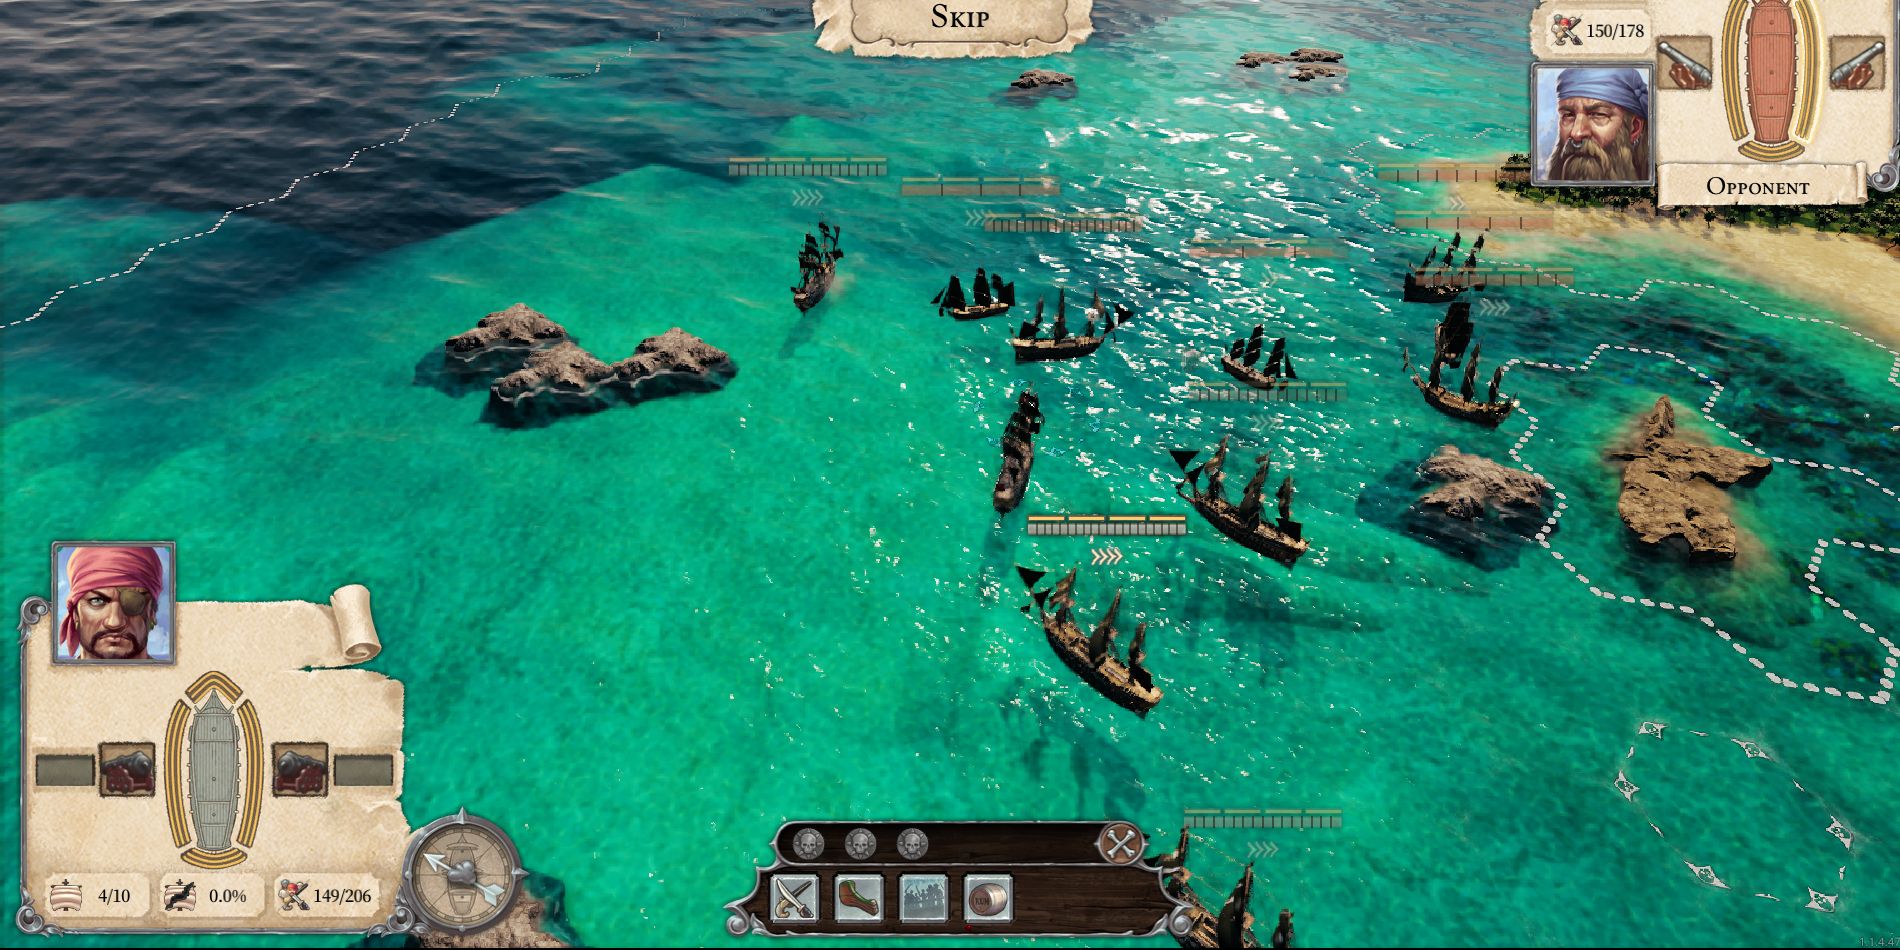 Charles Vane prepares a ramming maneuver in battle against rival pirates